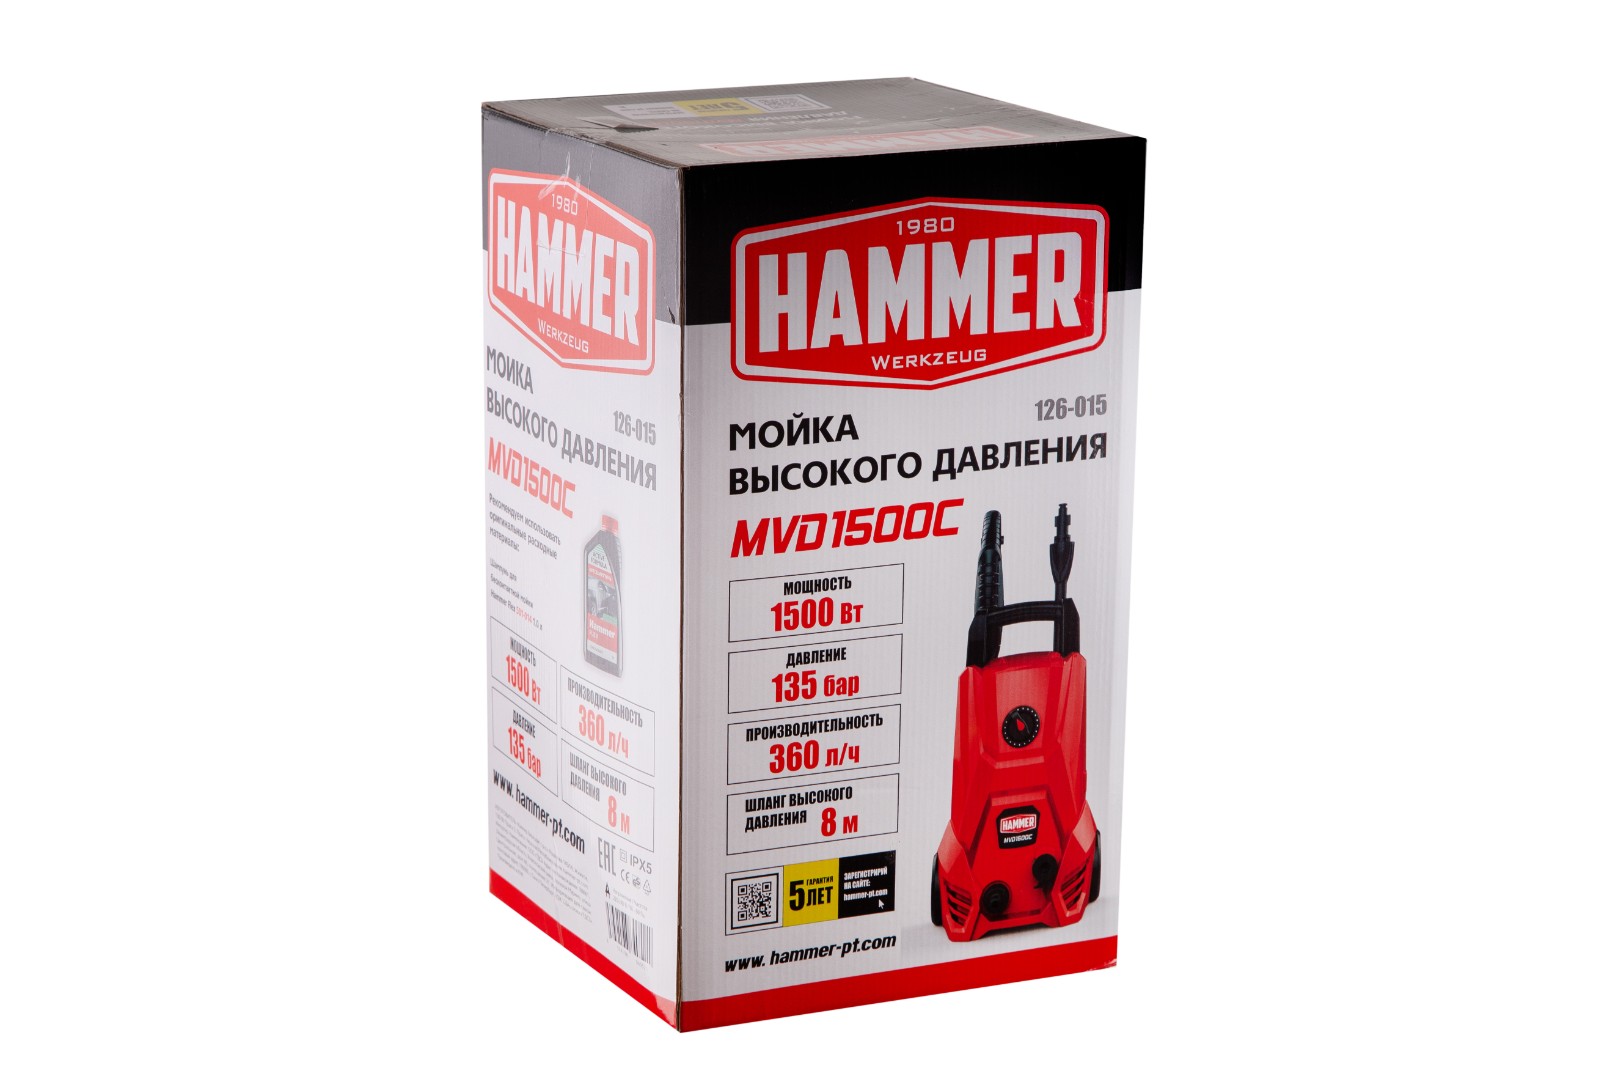  высокого давления HAMMER MVD1500C - Hammer Werkzeug S.R.O.